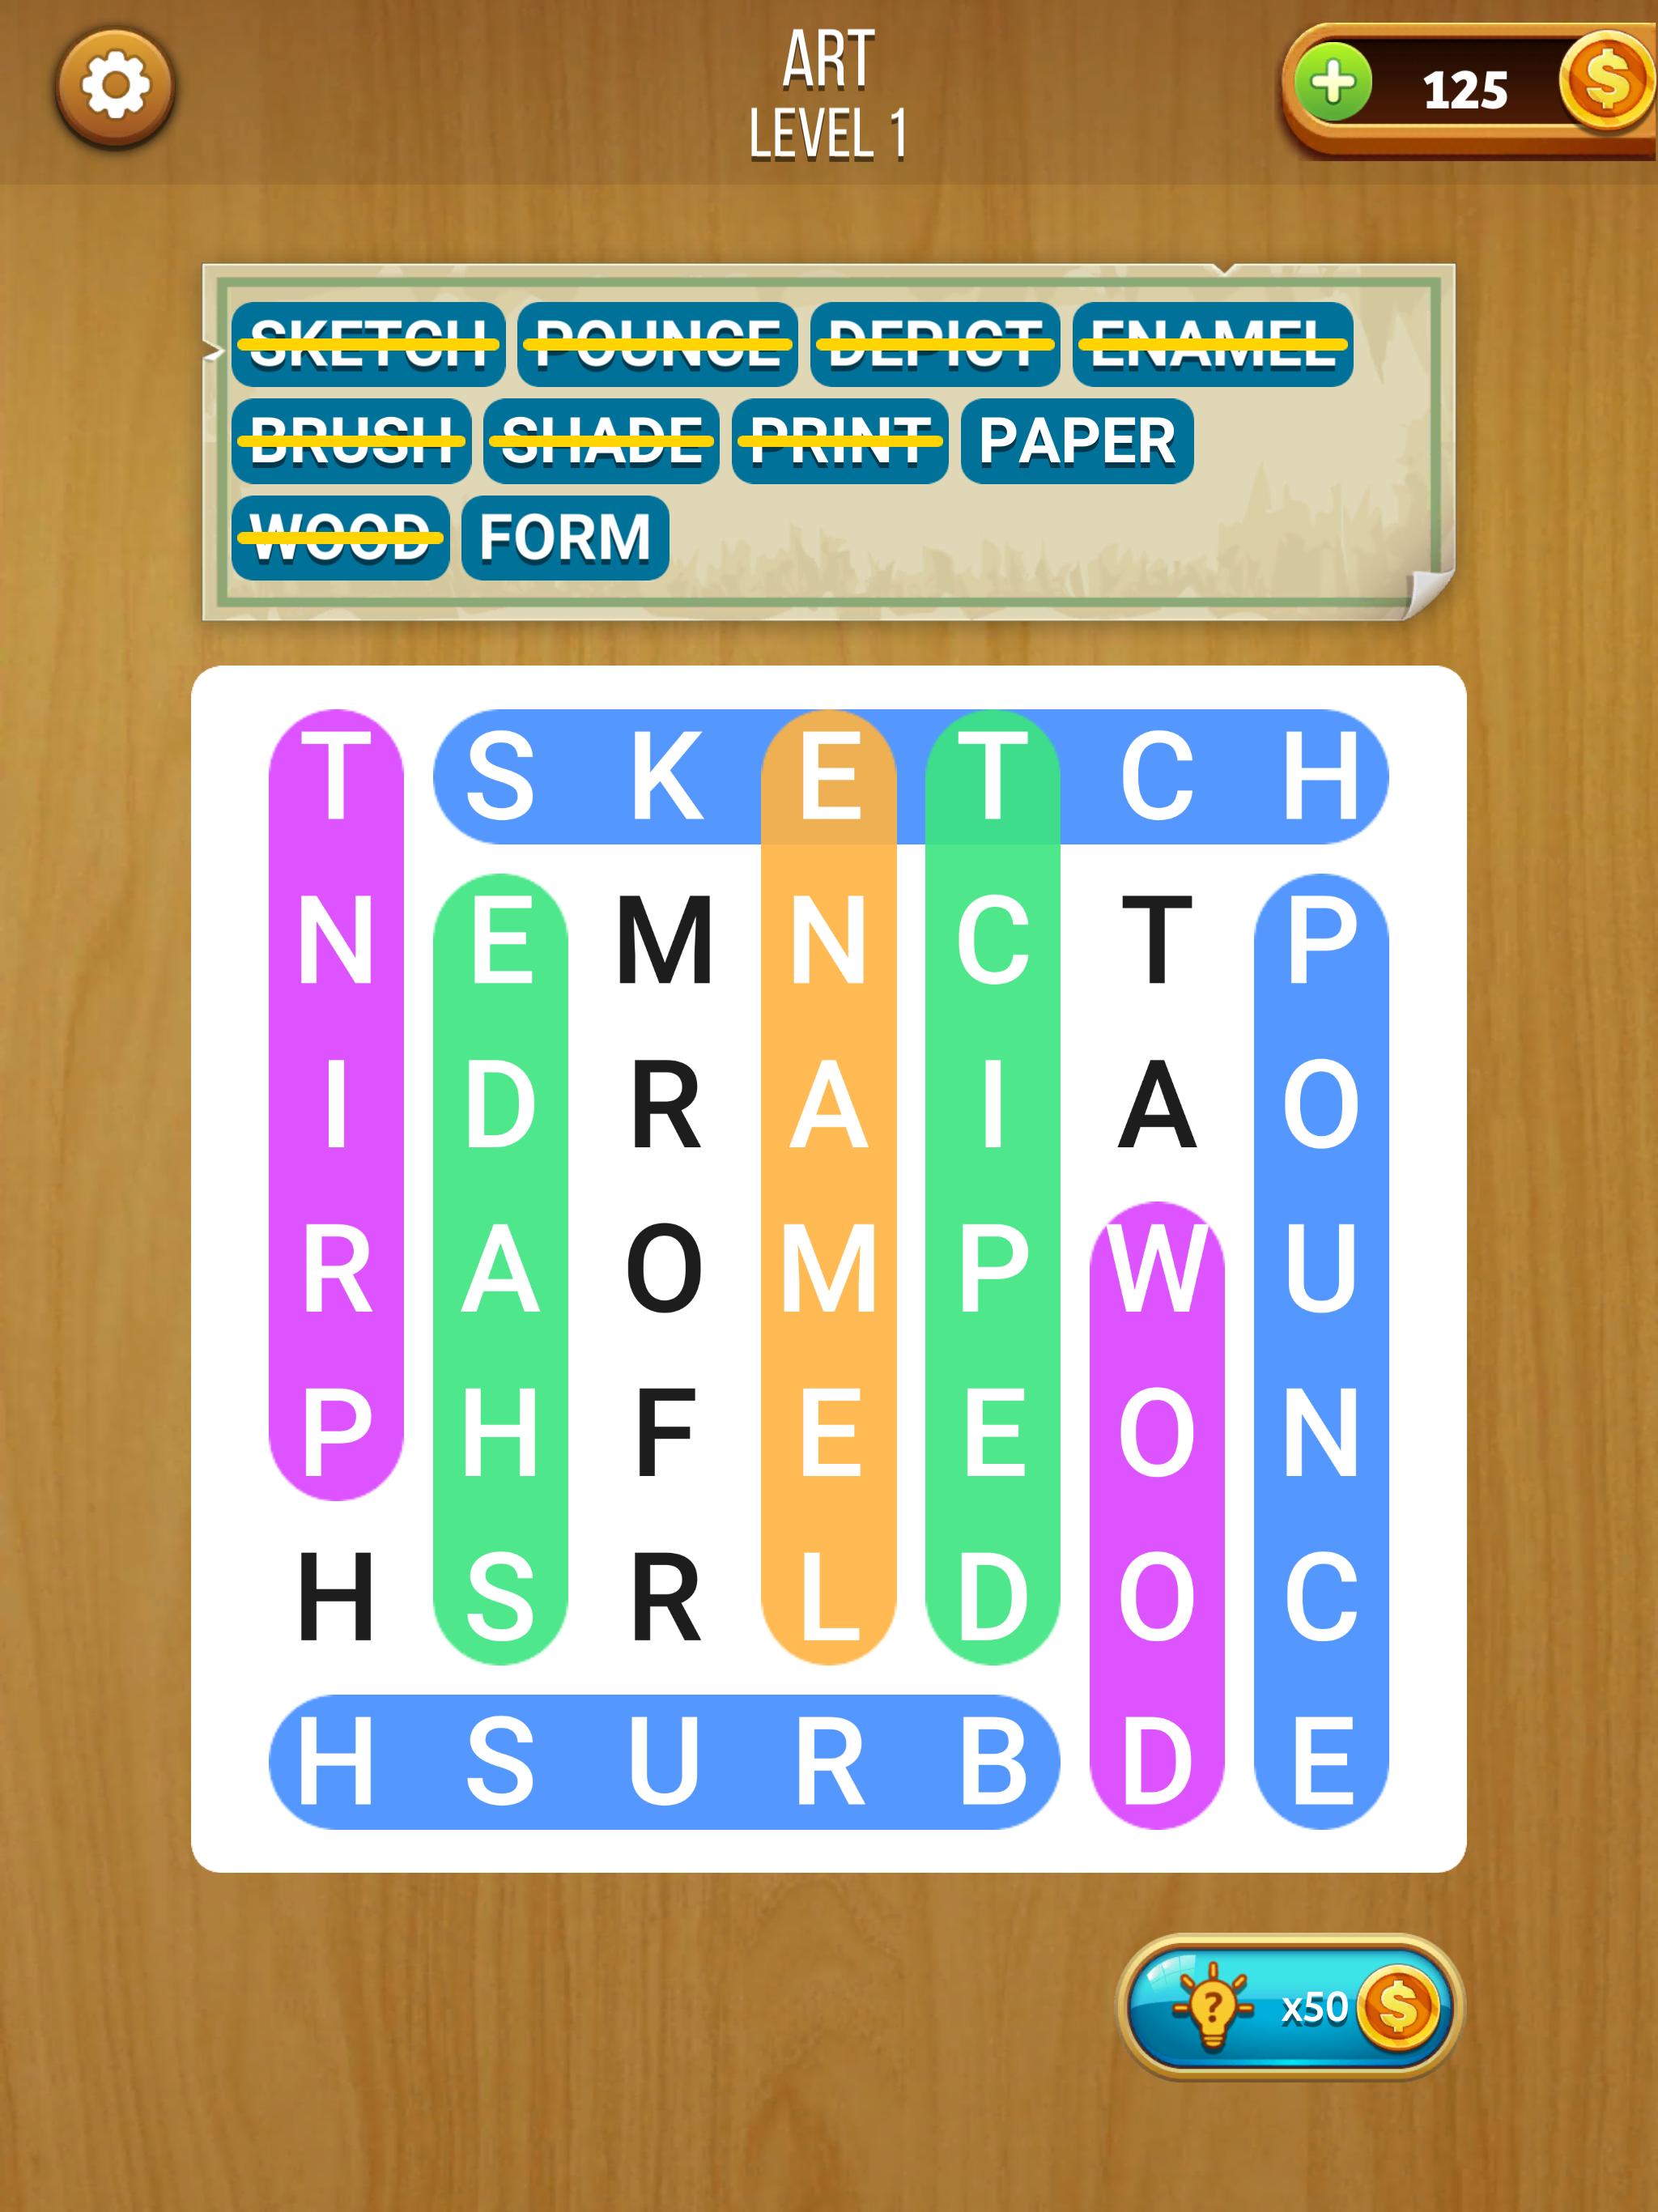 Hidden Words Word Search CrossWord Fun Game 1.0.1 Screenshot 14